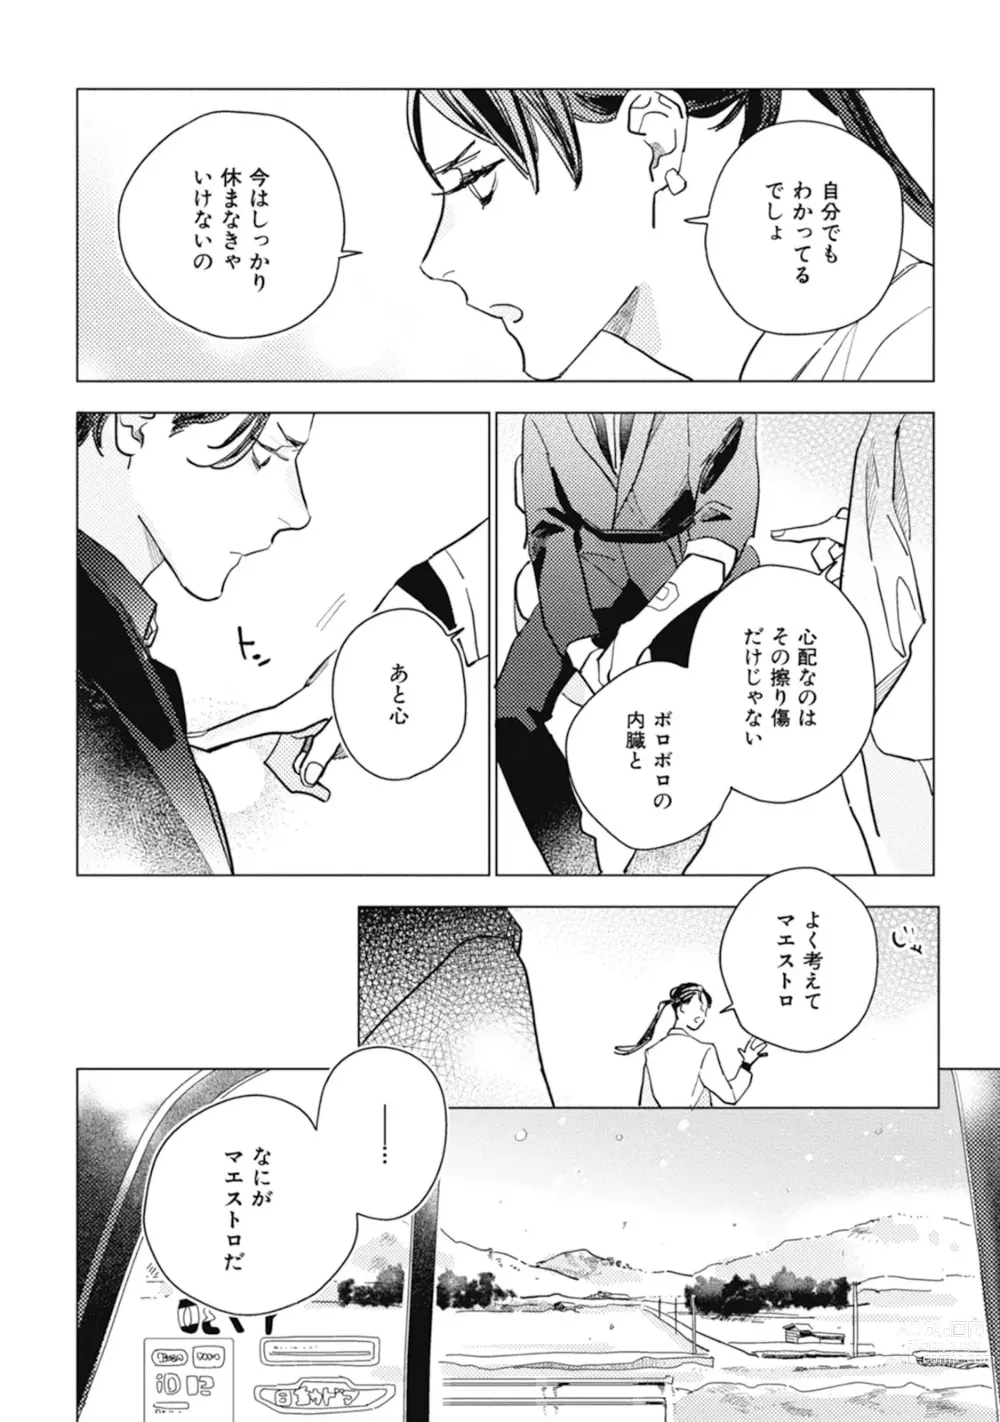 Page 12 of manga Kurikaeshi Ai no Oto